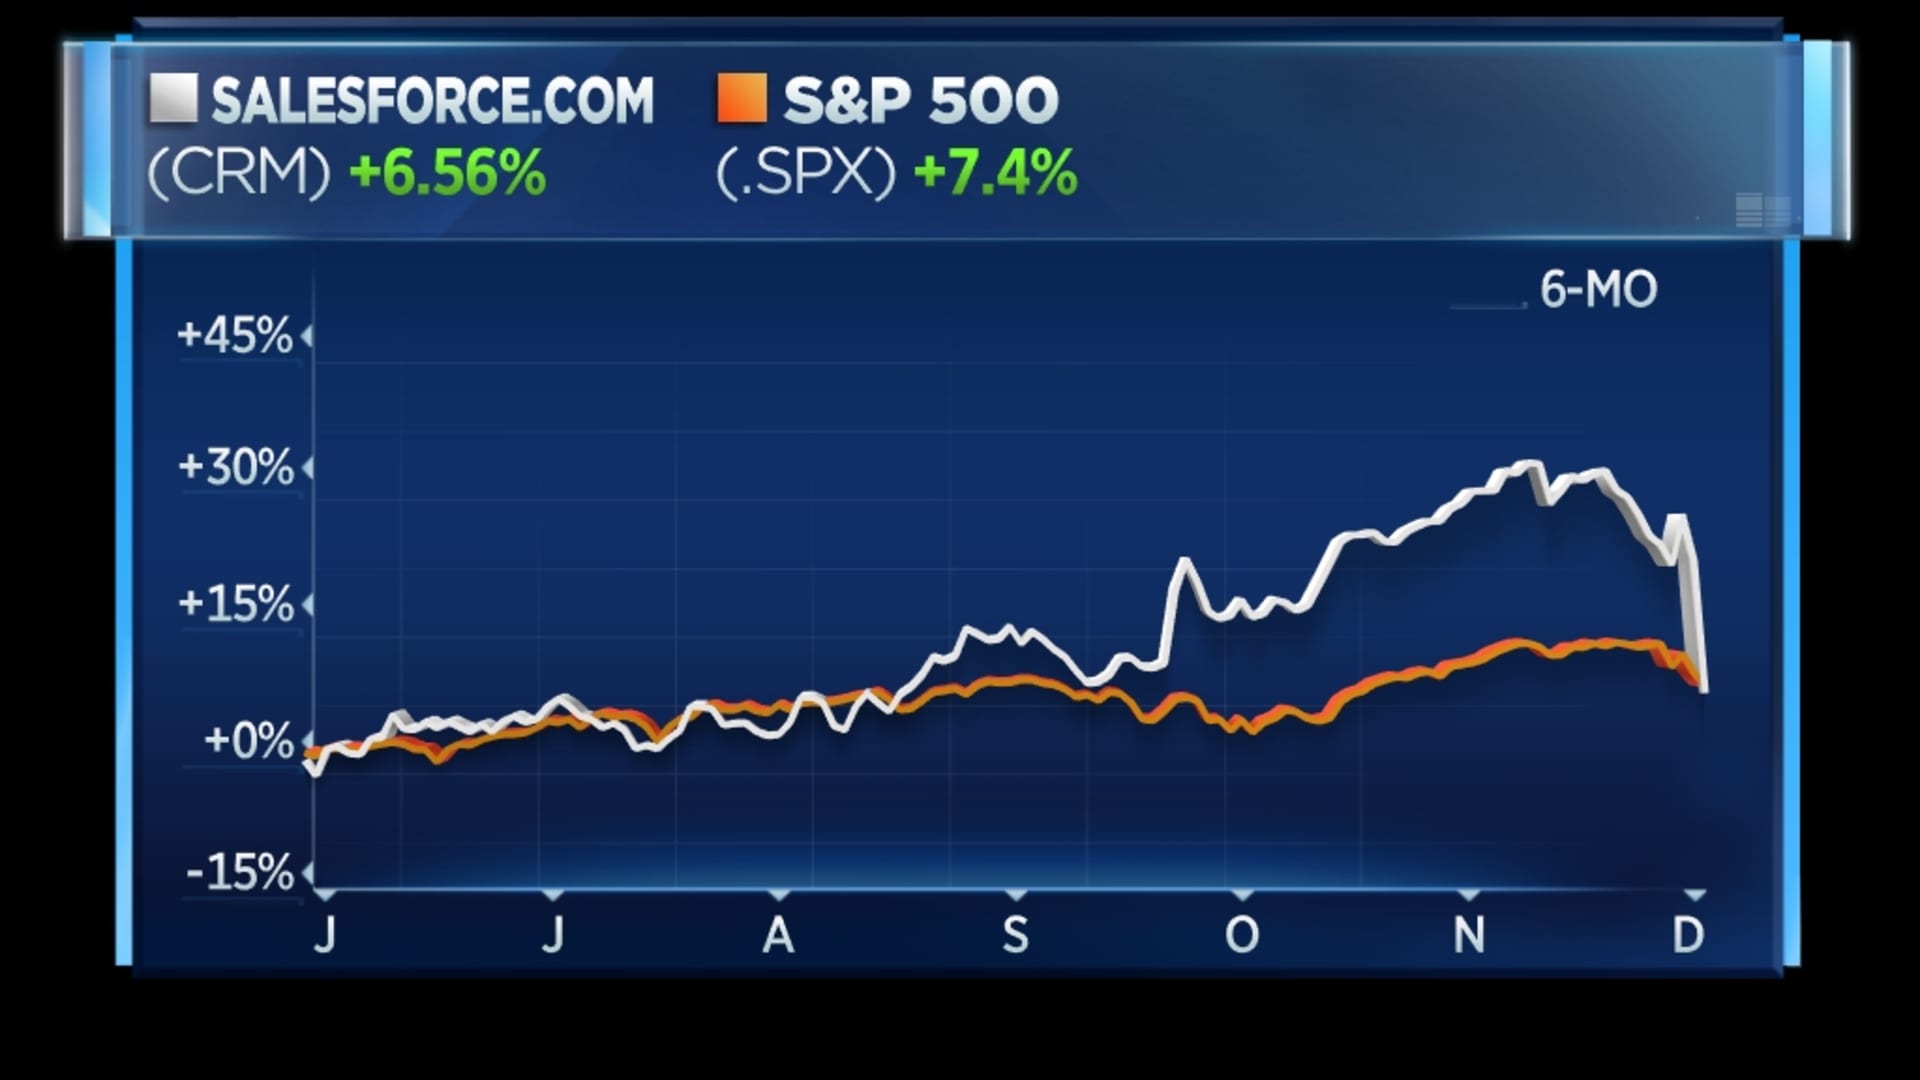 Salesforce vs. S&P 500